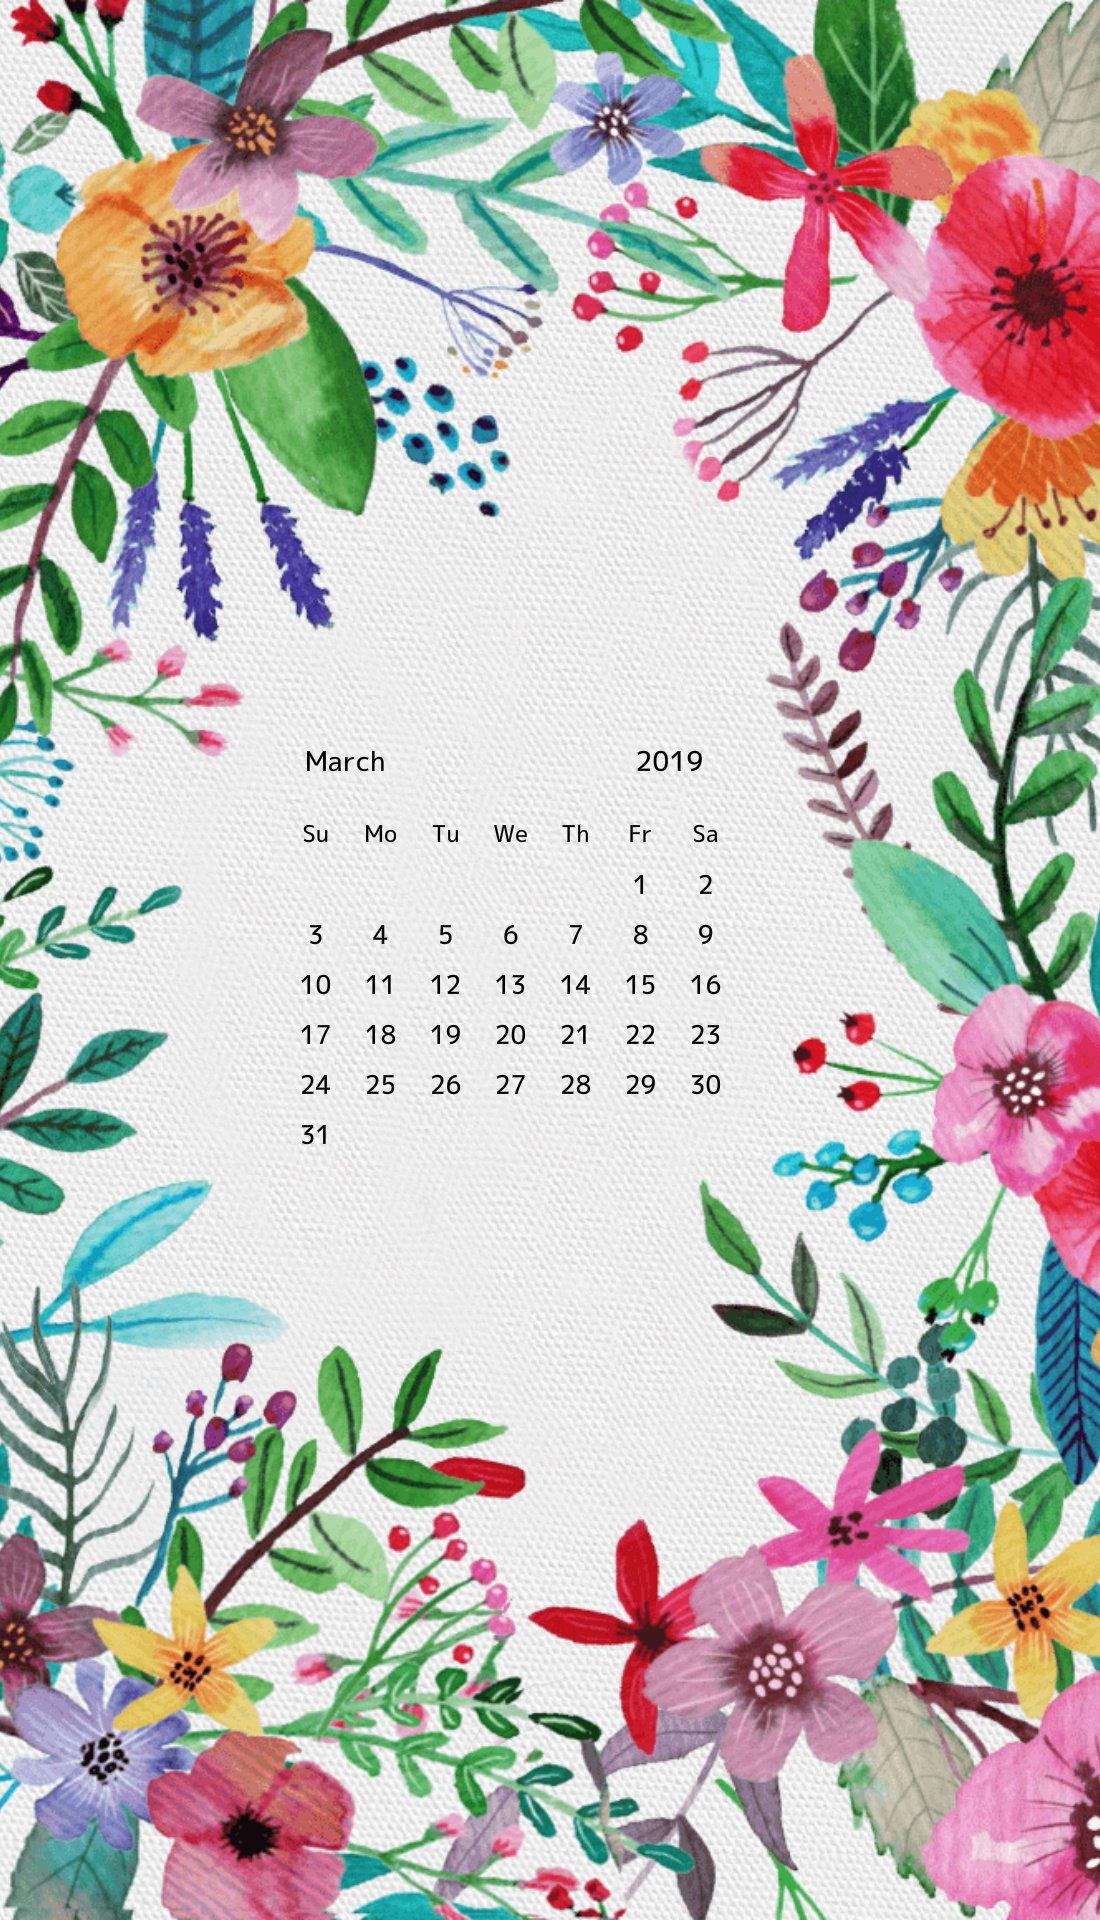 March 2019 Floral Printable Calendar For Walls. Calendar 2019 Printable